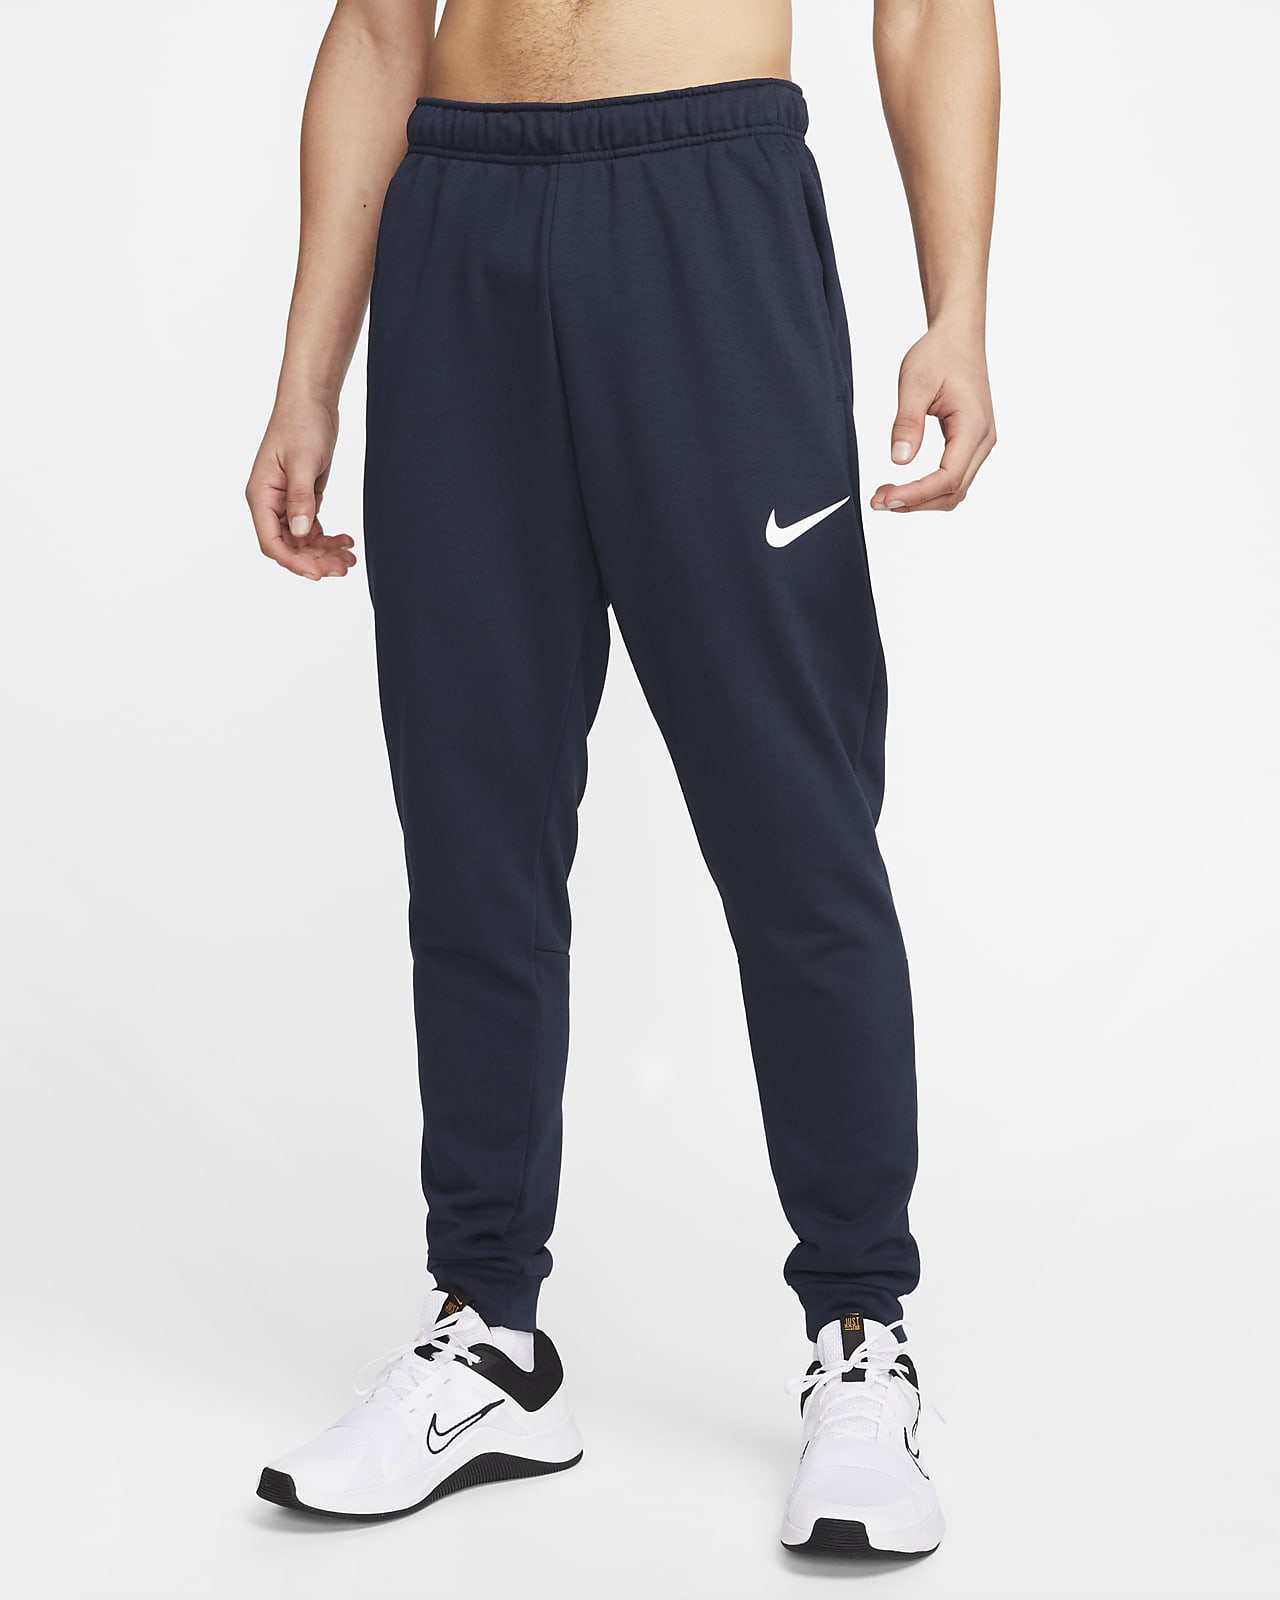 Nike Dry Pantalons cenyits de teixit Fleece Dri-FIT de fitnes - Home